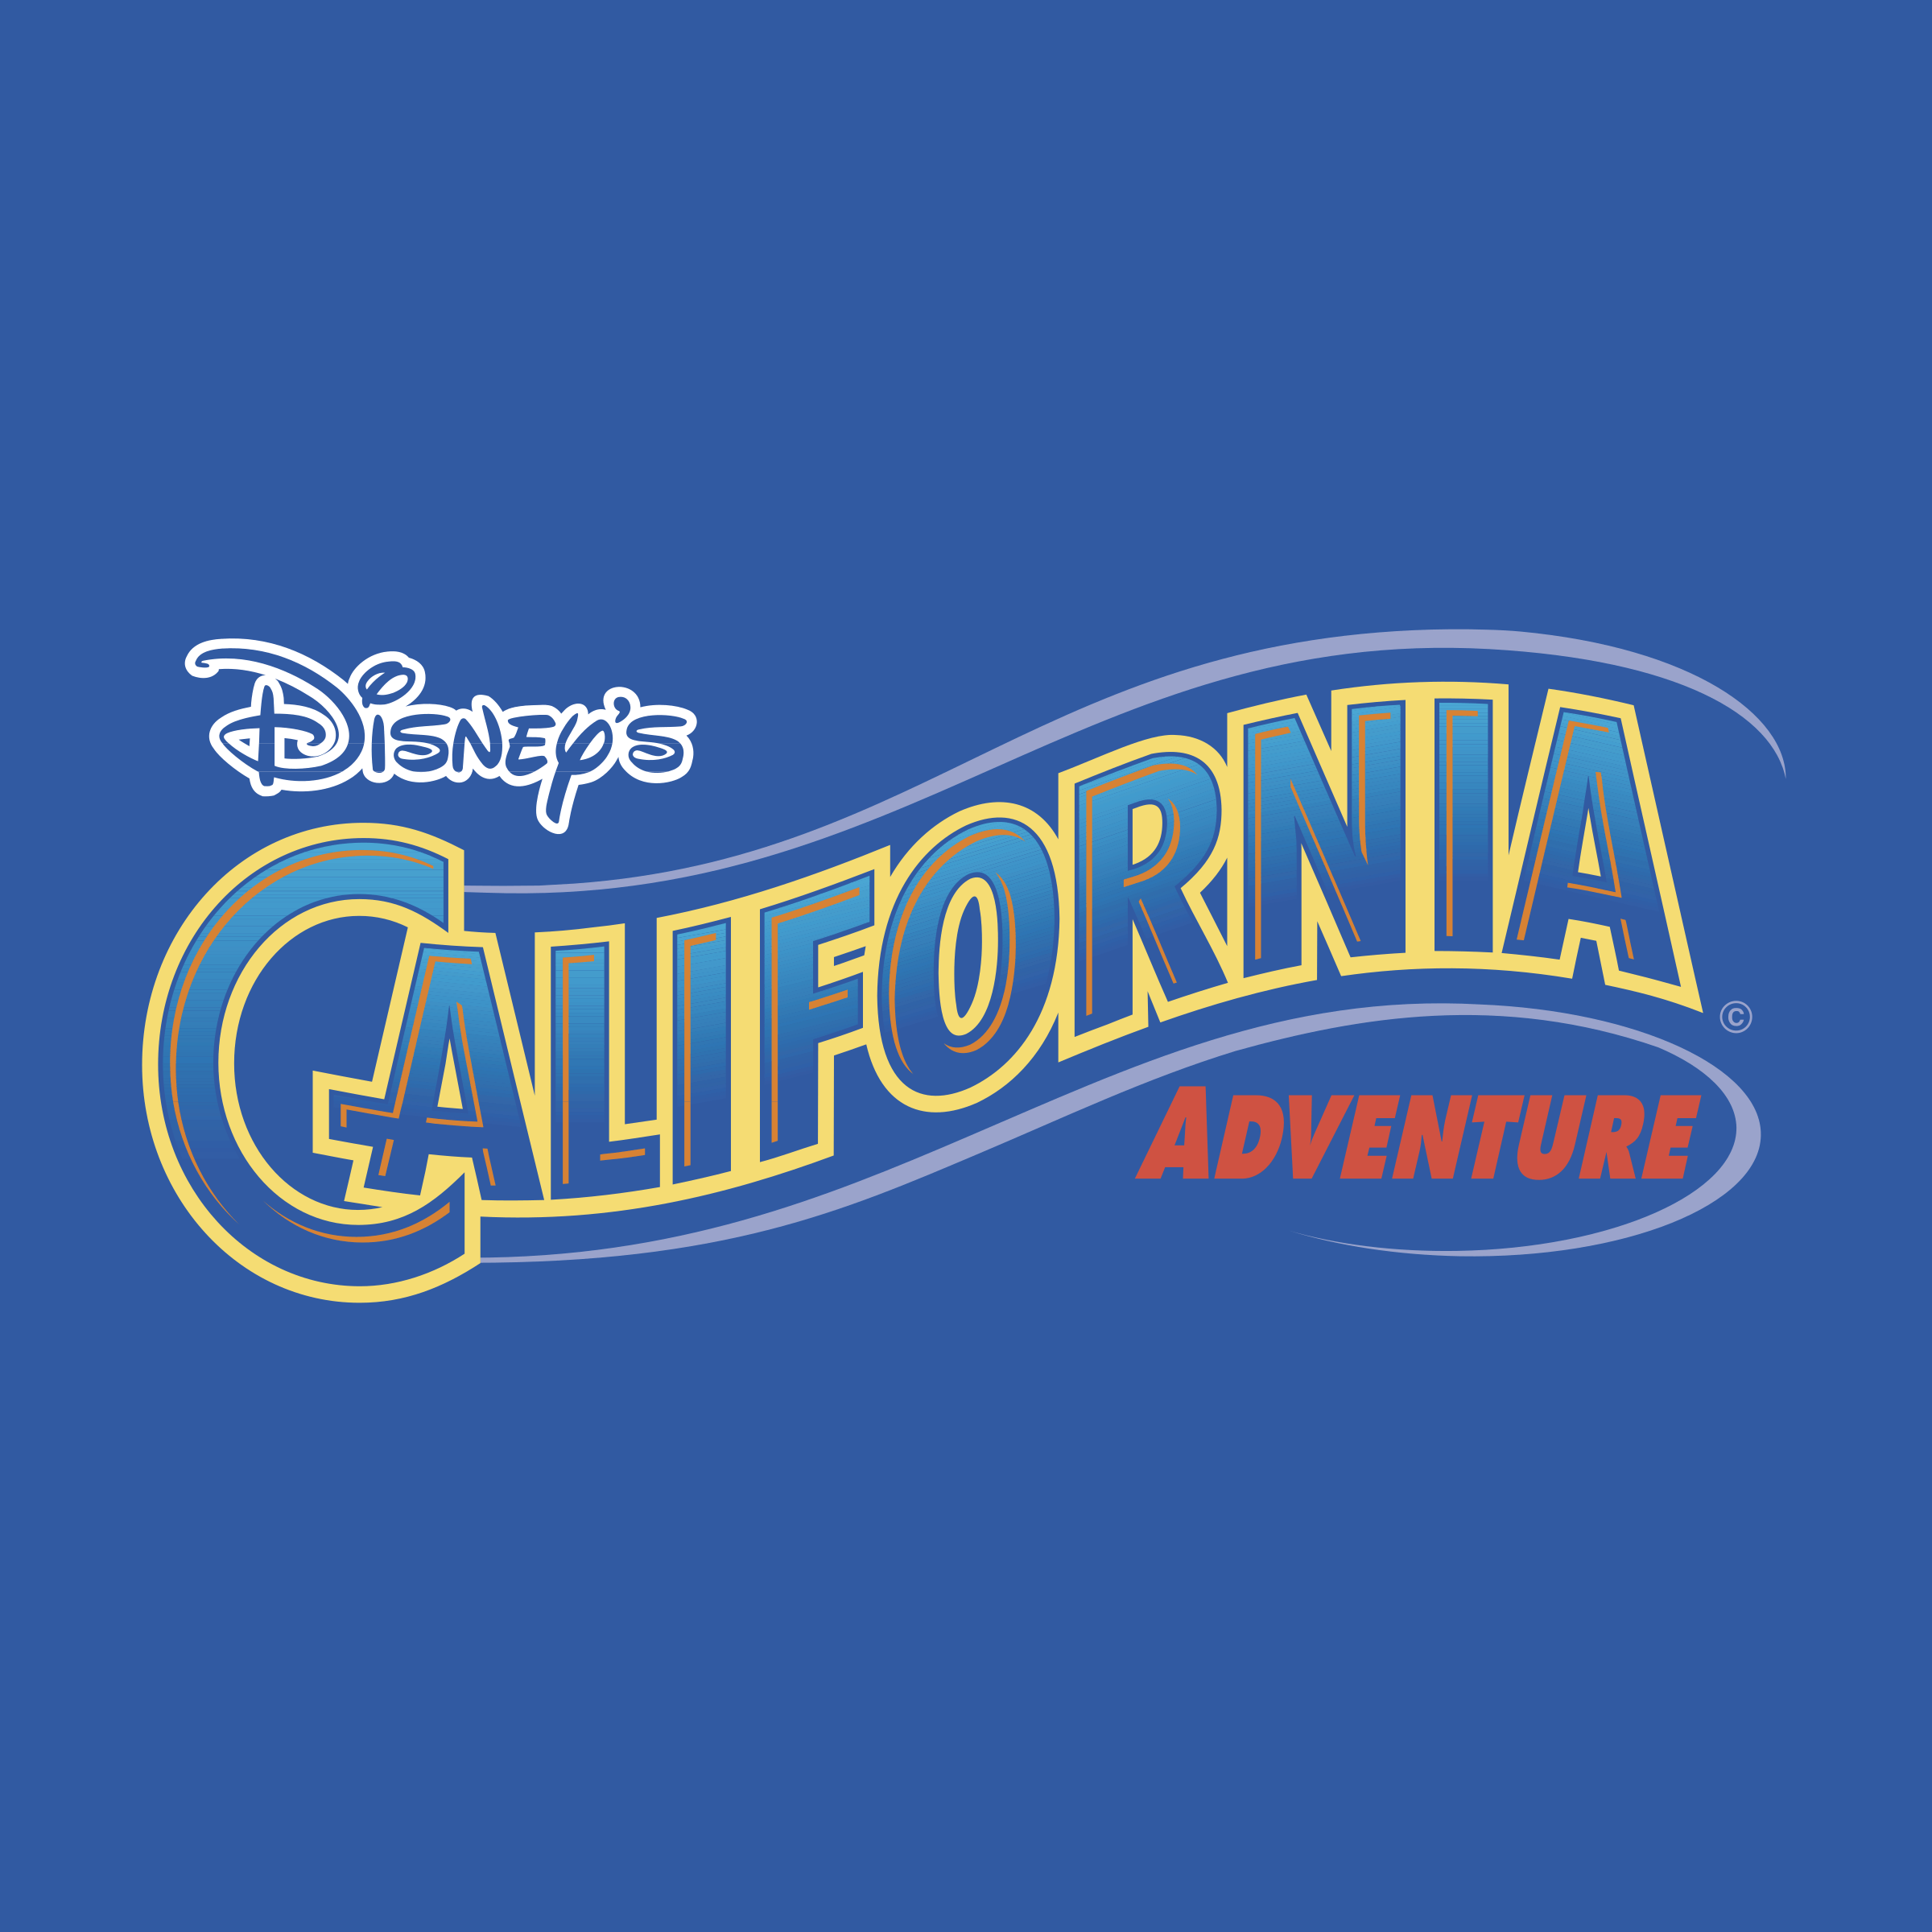 Disney's California Adventure Logo - Disney's California Adventure Logo PNG Transparent & SVG Vector ...